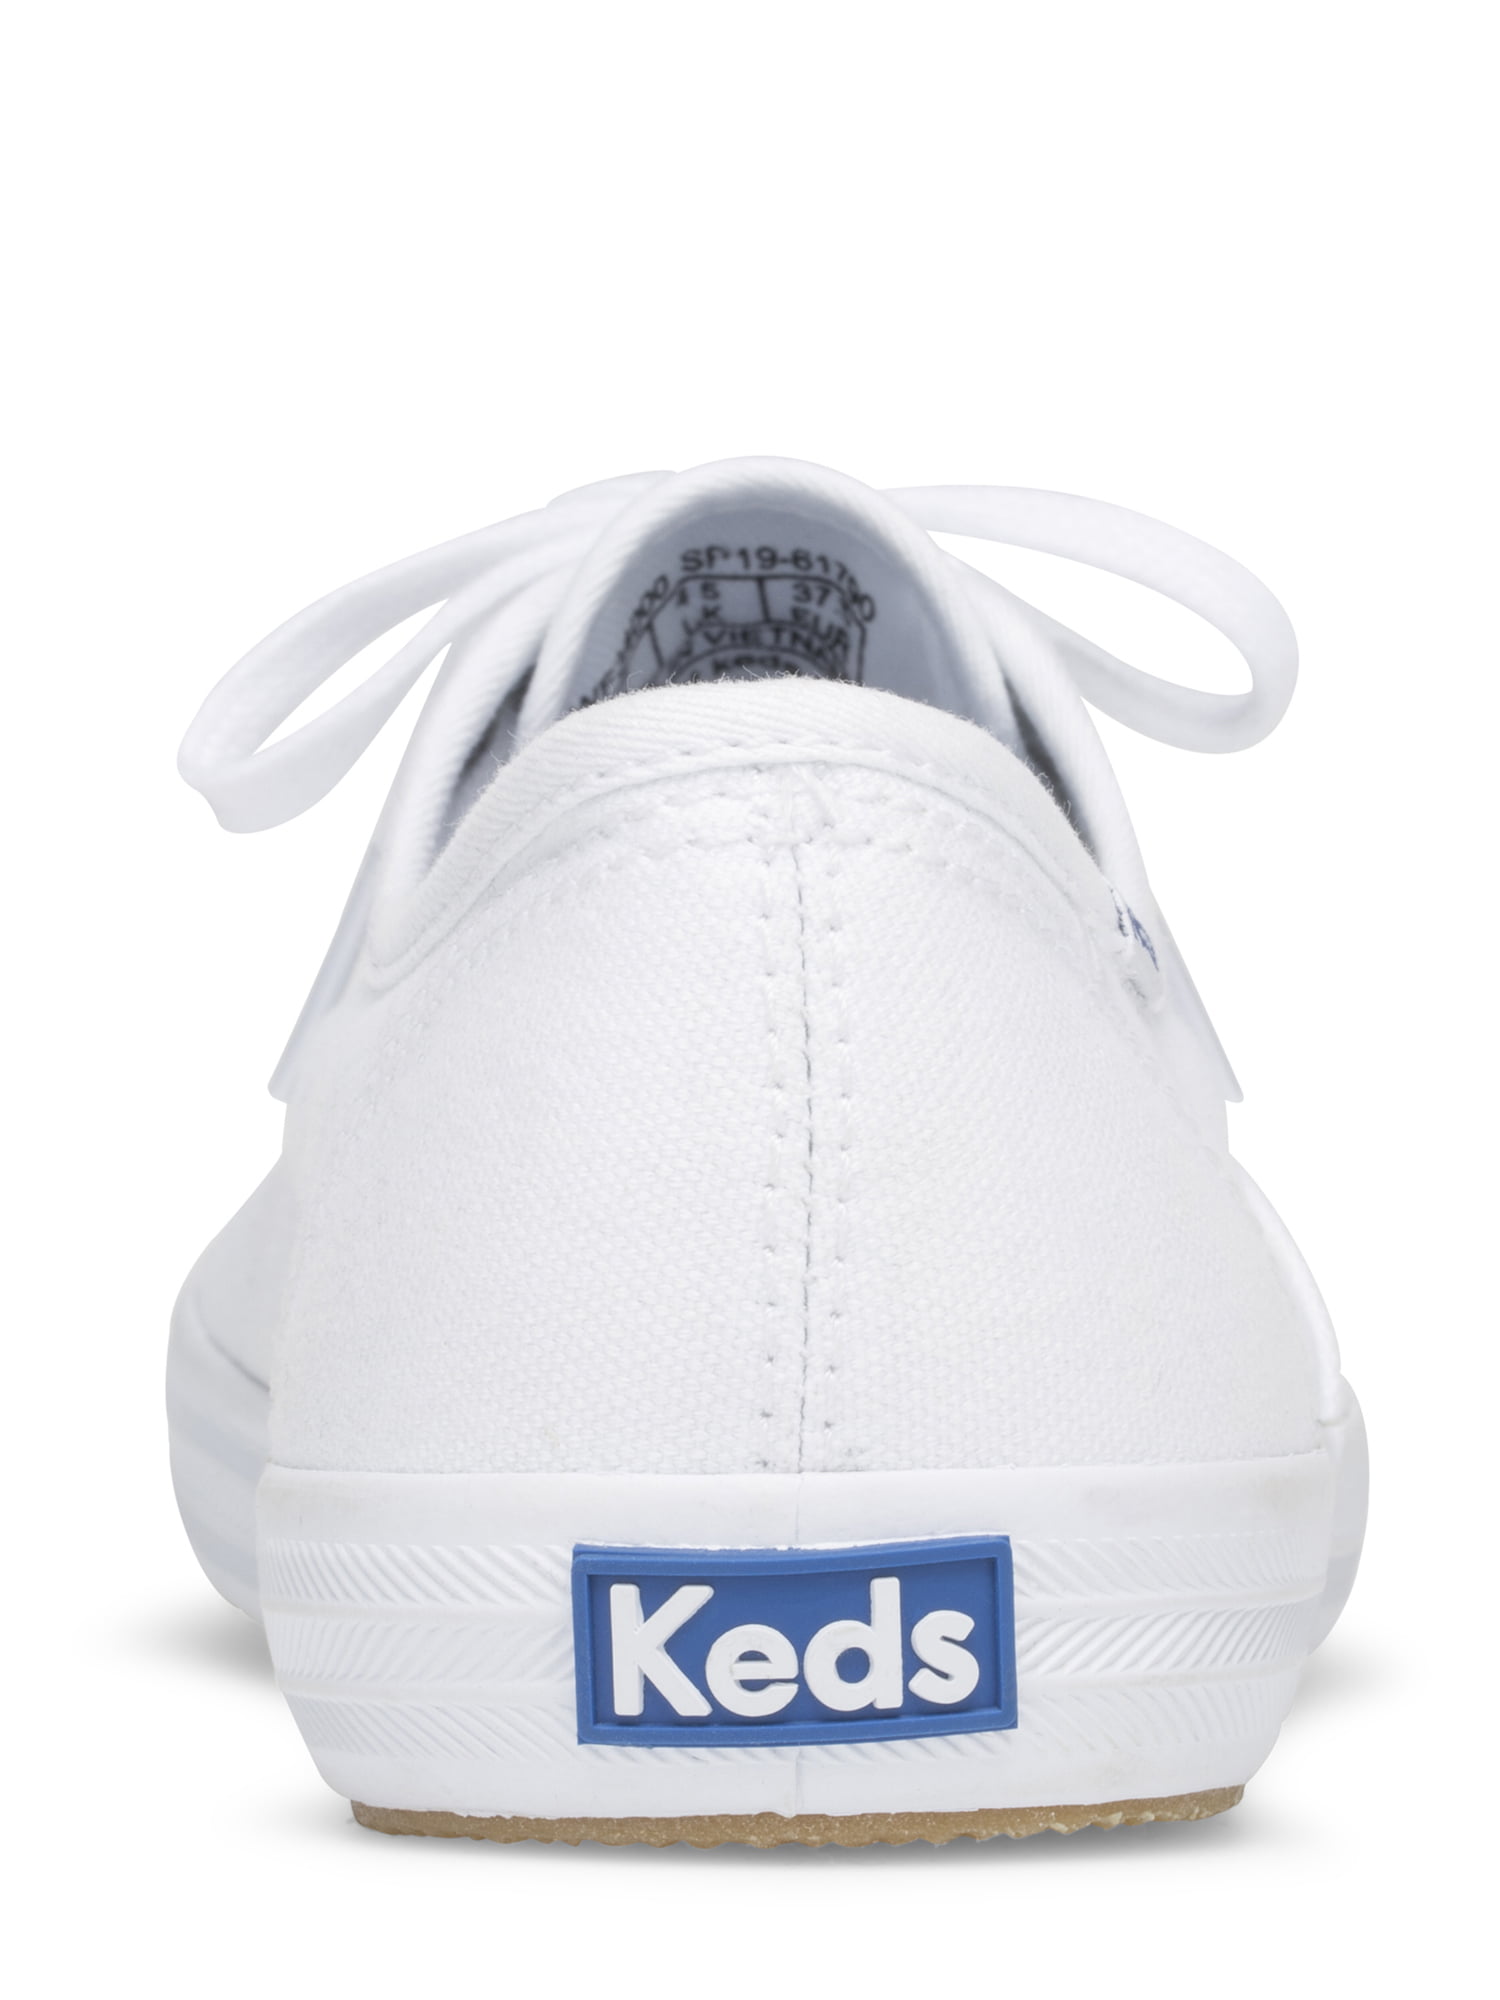 Keds Champion Canvas Sneaker (Women's) Walmart.com